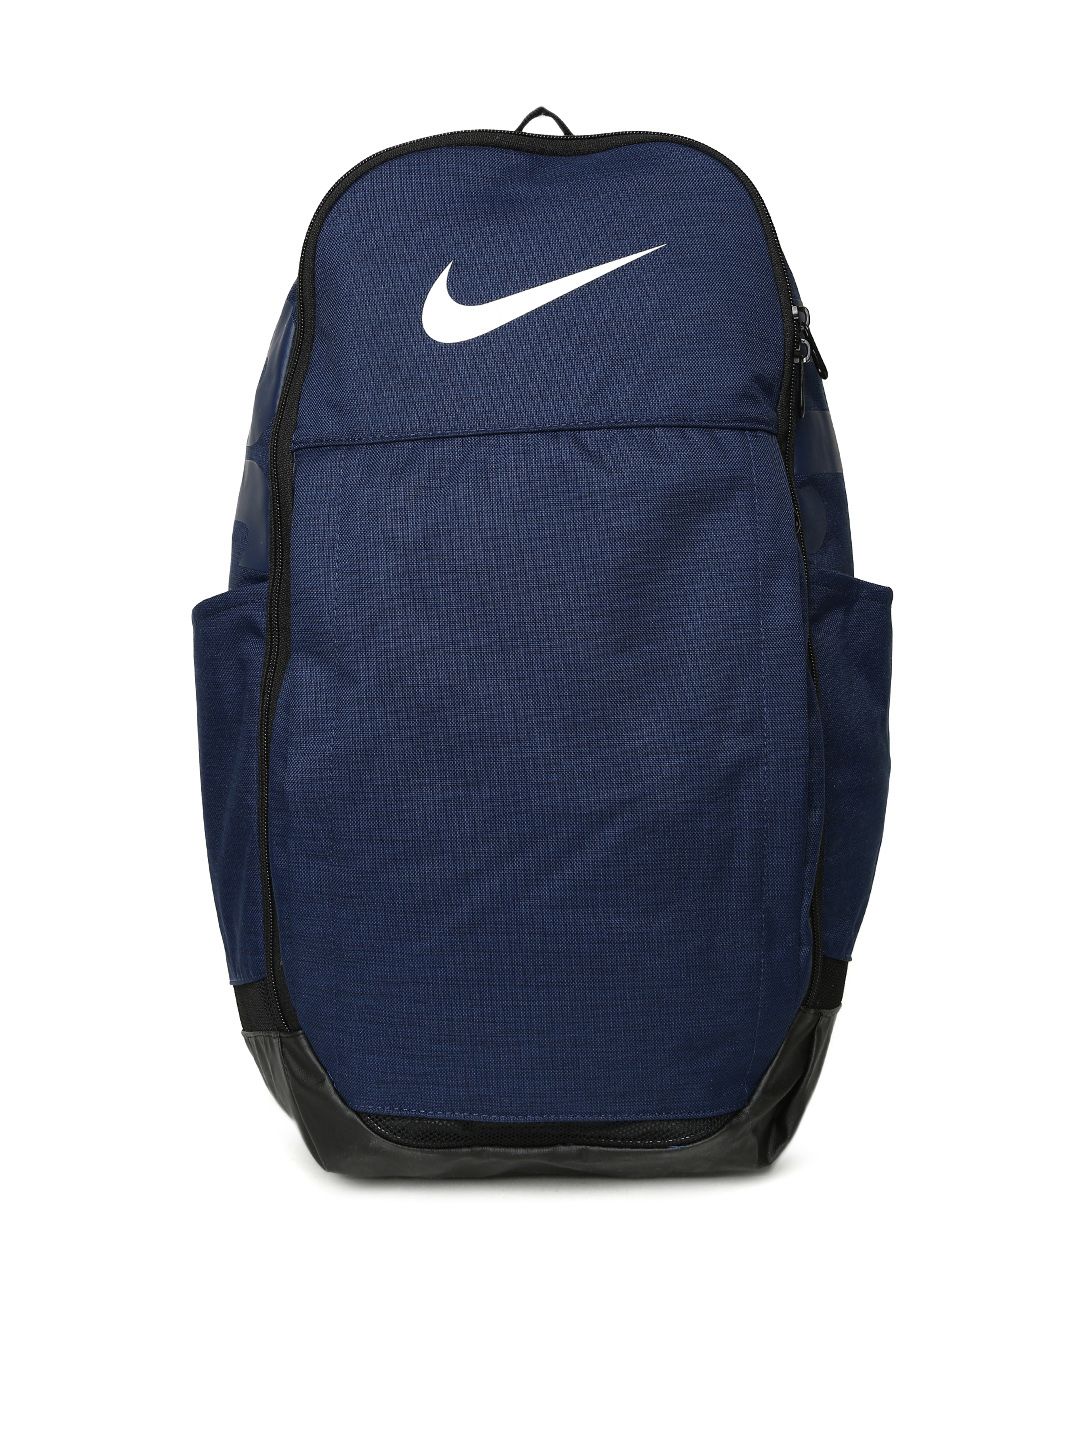 identificación envase técnico Nike Backpacks India Belgium, SAVE 34% - aveclumiere.com